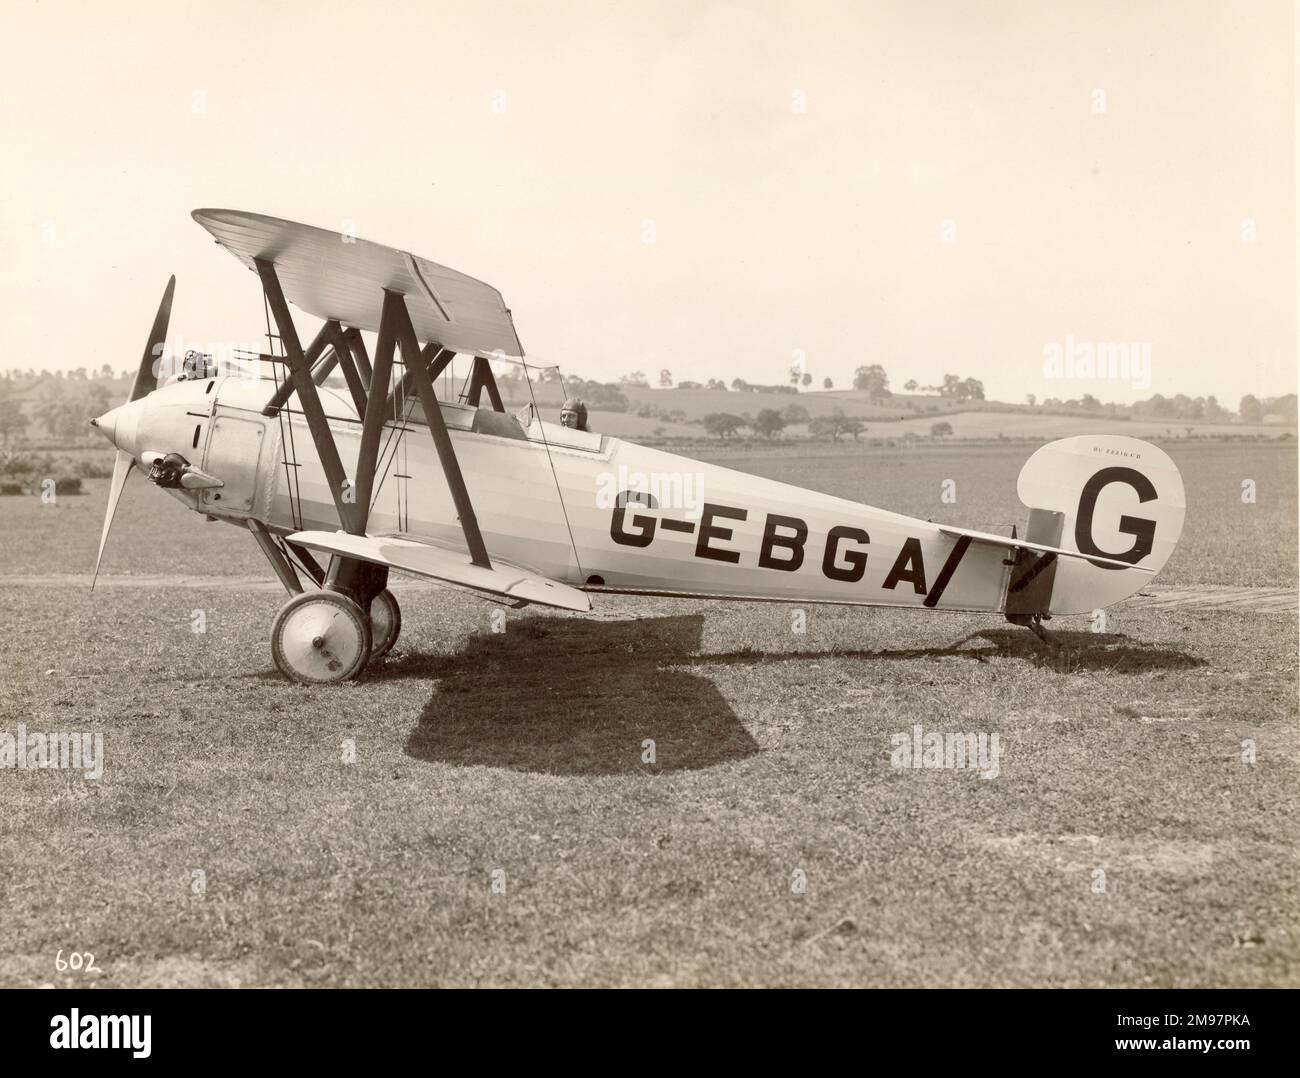 Bristol PTM, G-EBGA, competitions aircraft, 83A Lucifer. Stock Photo